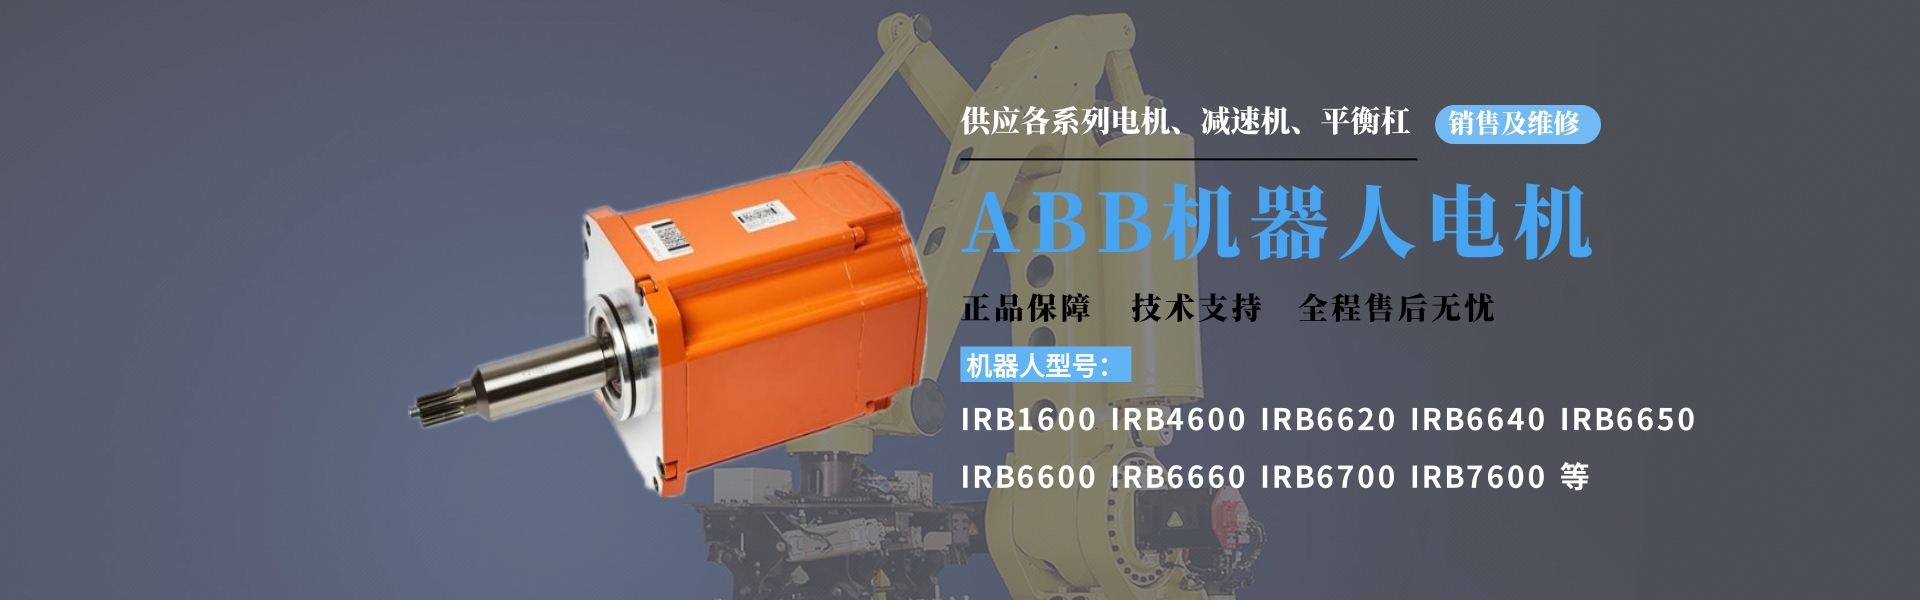 ABB机器人电机3HAC029236-001 现货 维修 ABB机器人电机3HAC029236-001,ABB机器人马达3HAC029236-001,ABB机器人电机维修,ABB机器人马达维修